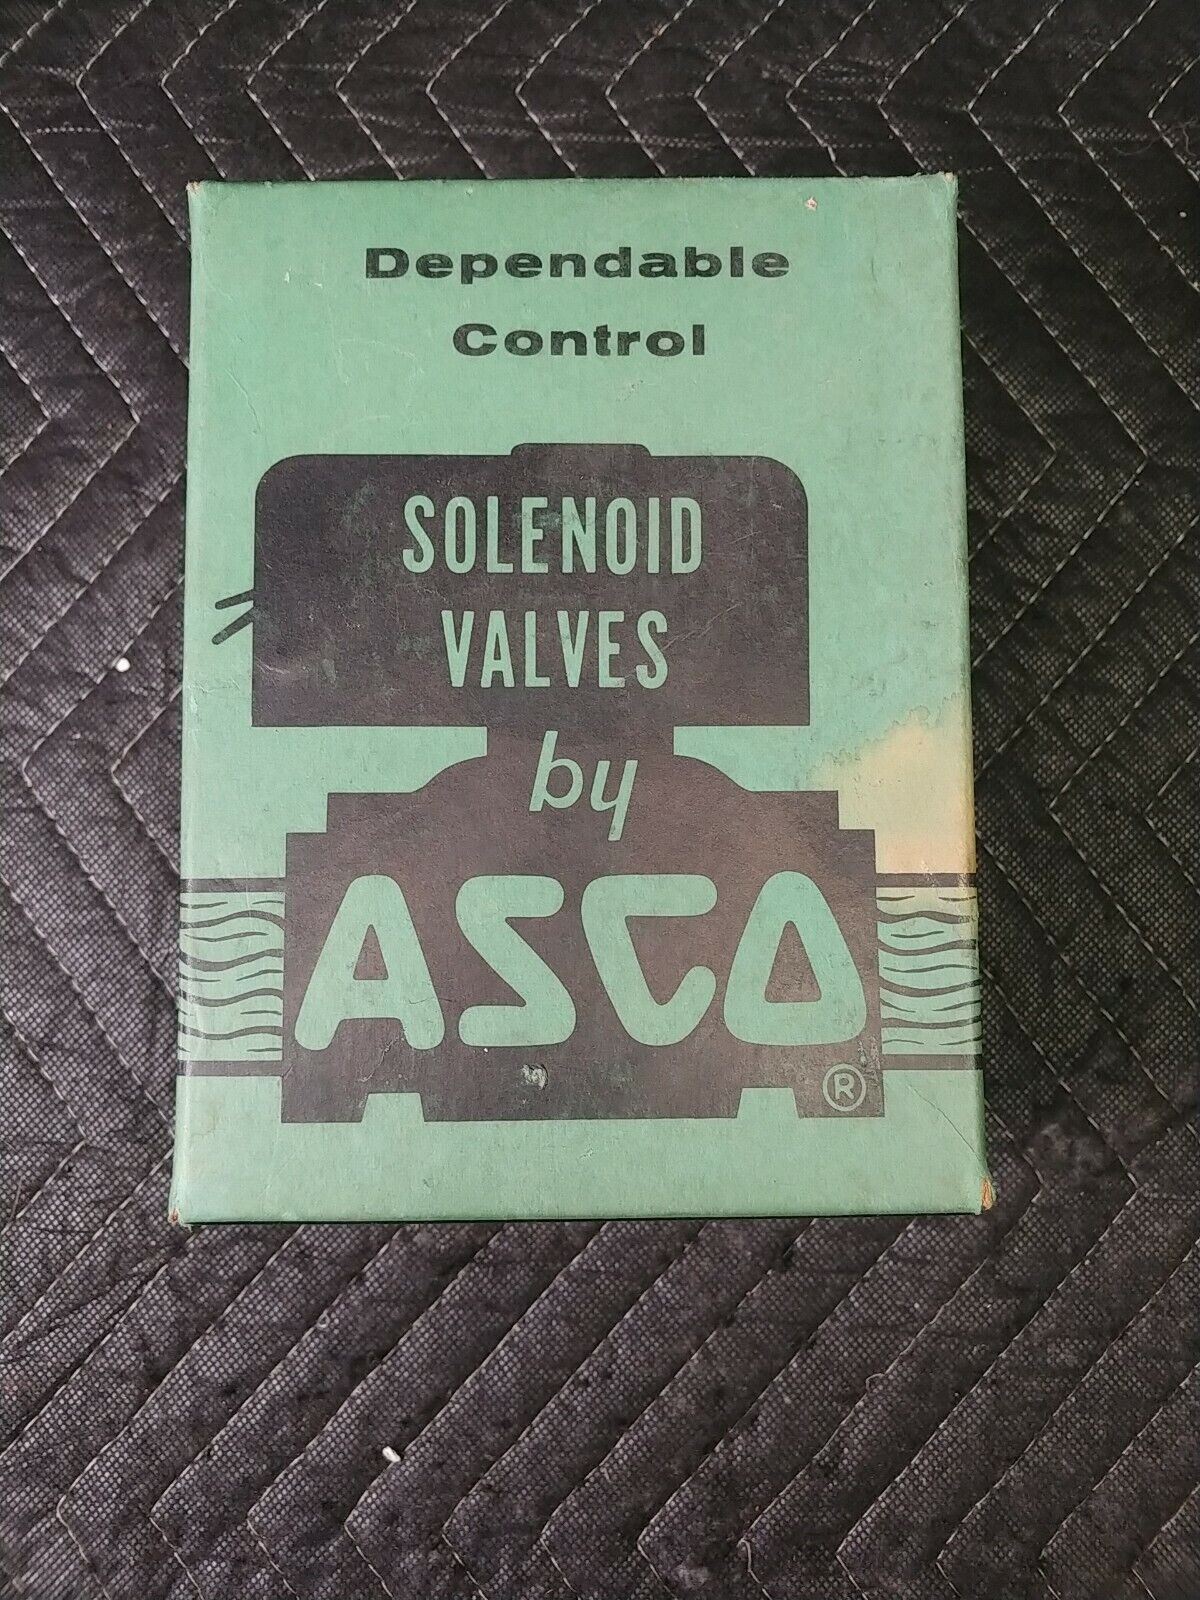 1/4" ASCO Valve 83444 4-Way Threaded Piston Poppet Solenoid Valve NOS - 28V DC